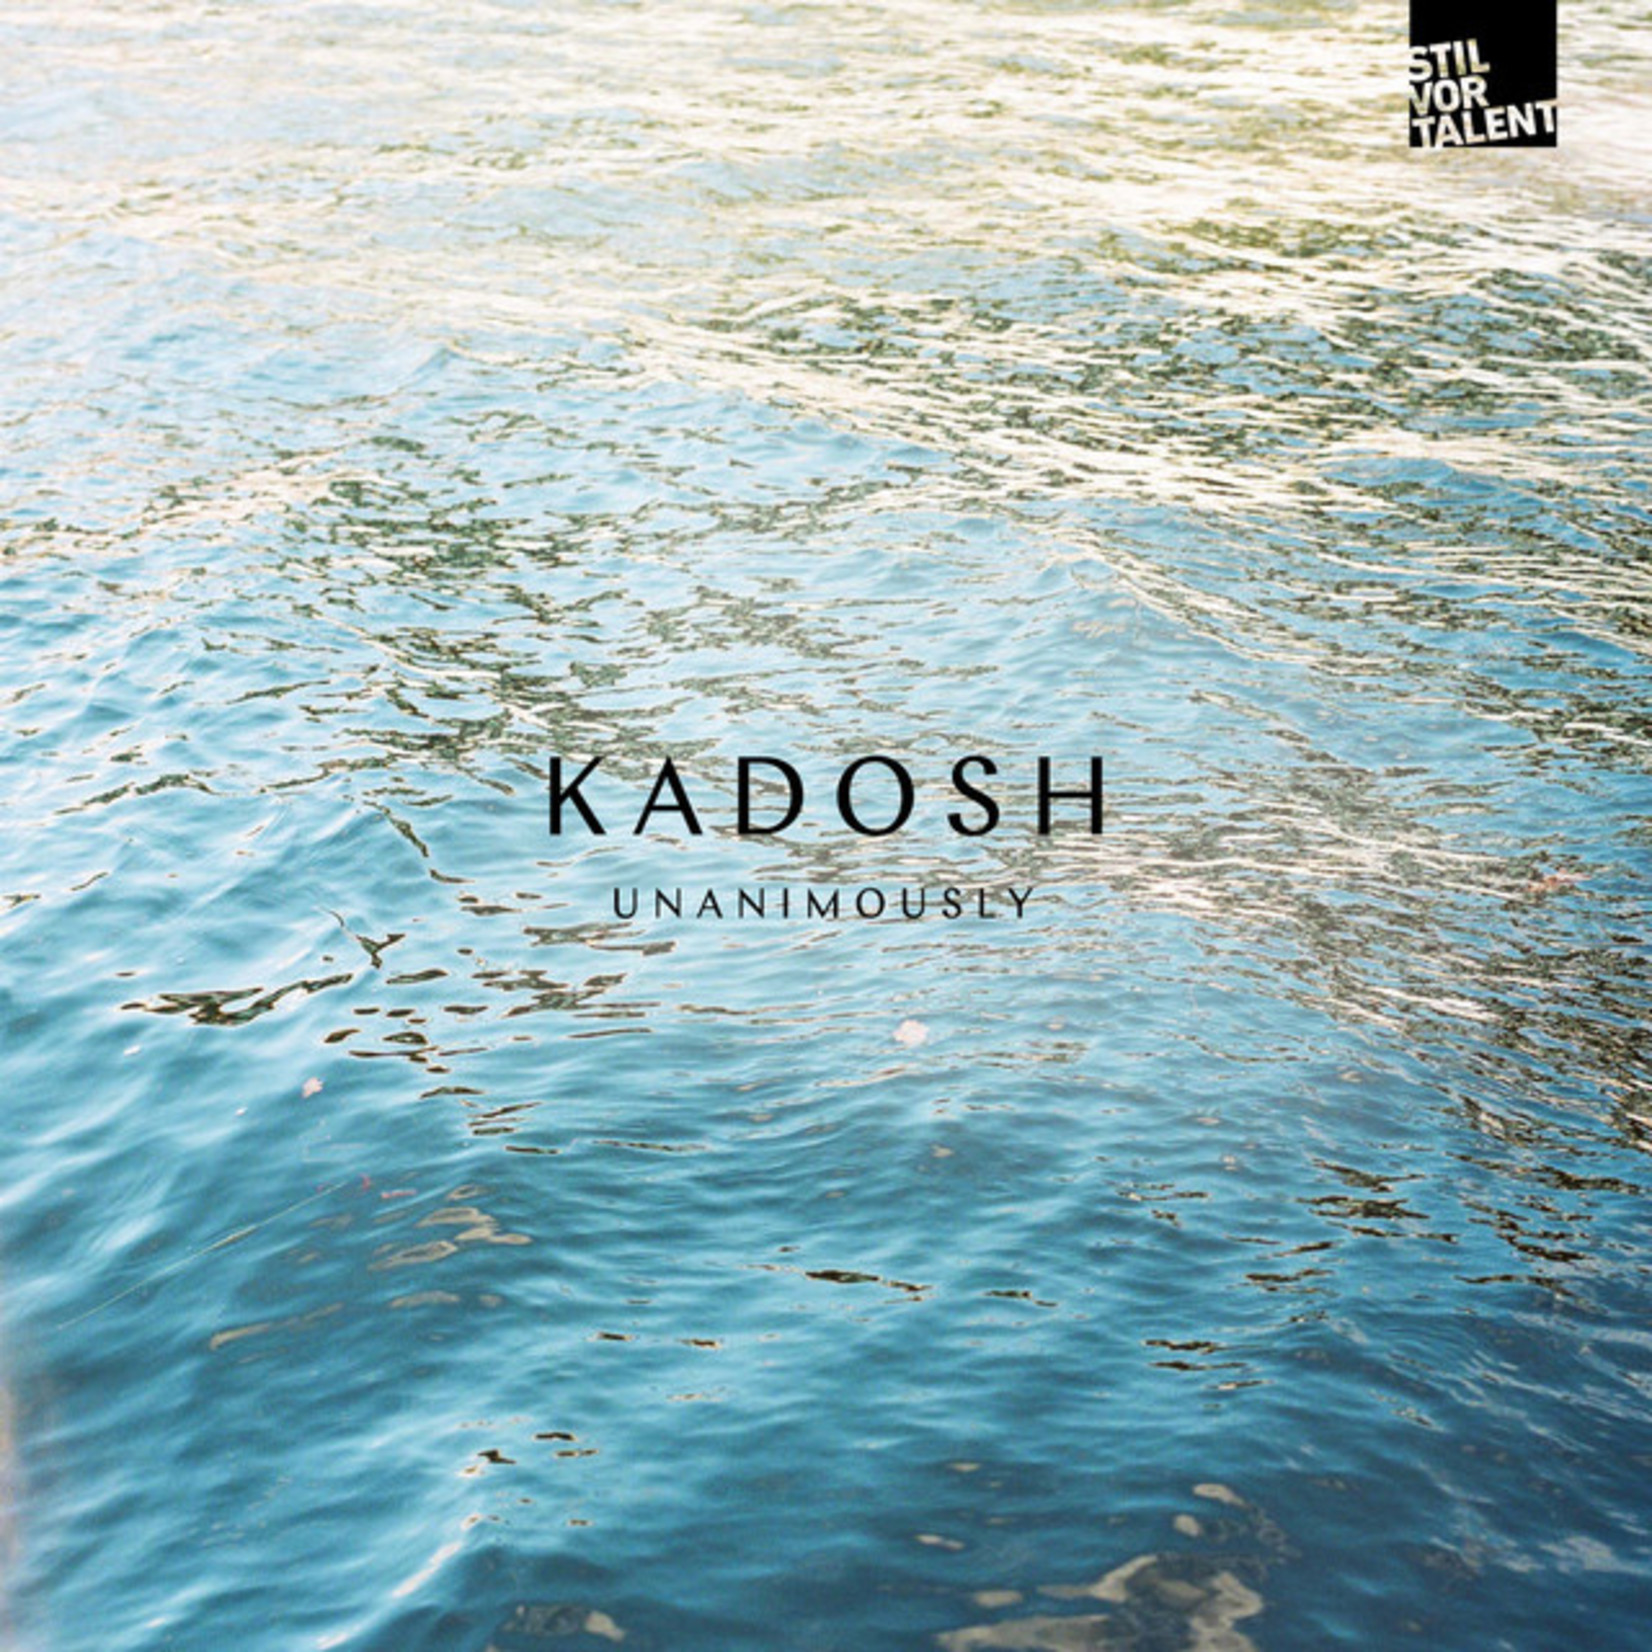 Kadosh – Unanimously